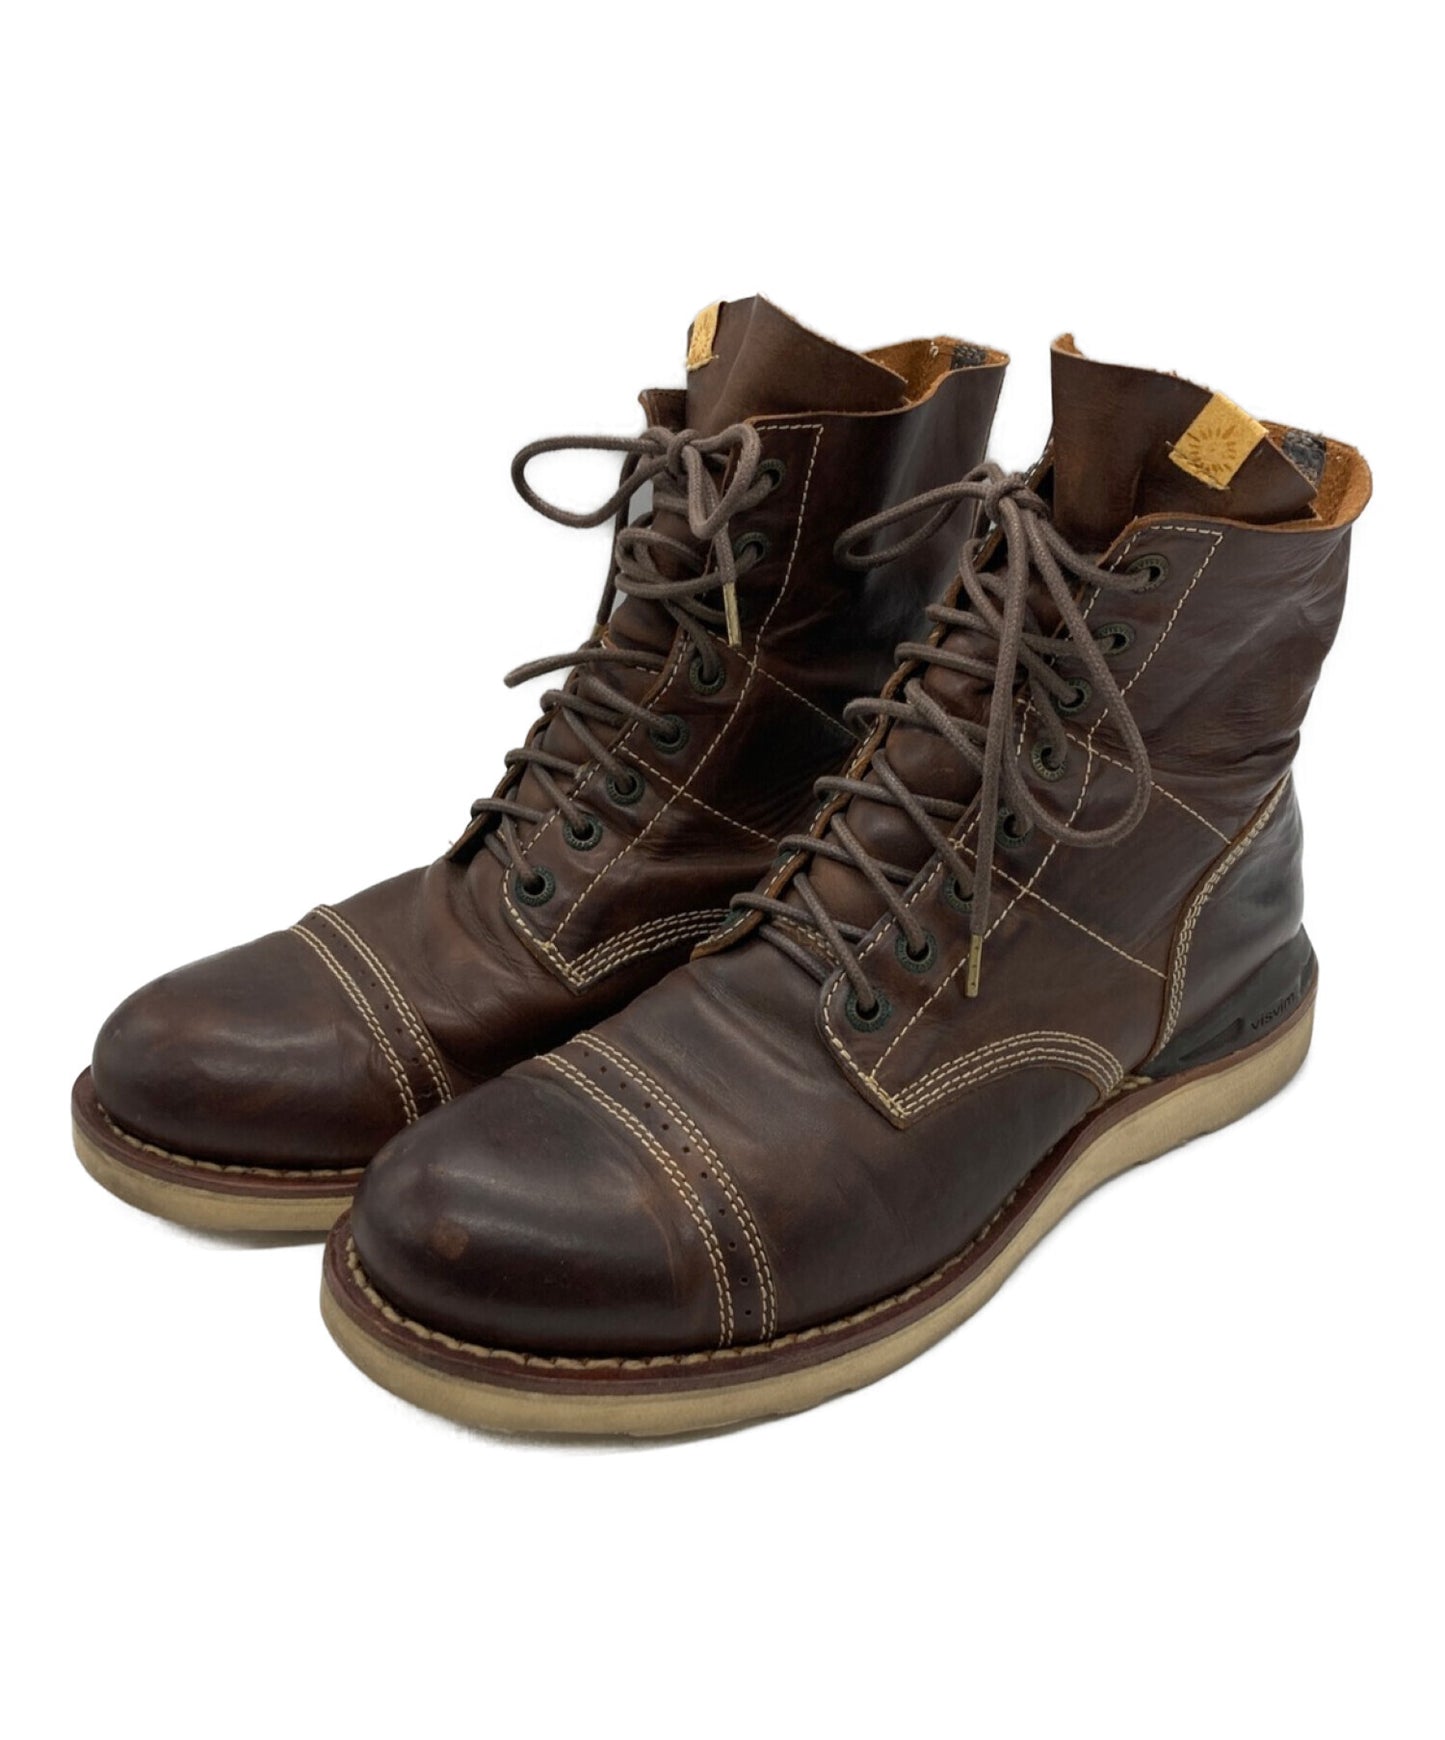 visvim VIRGIL CANTOR-FOLK oiled leather boots